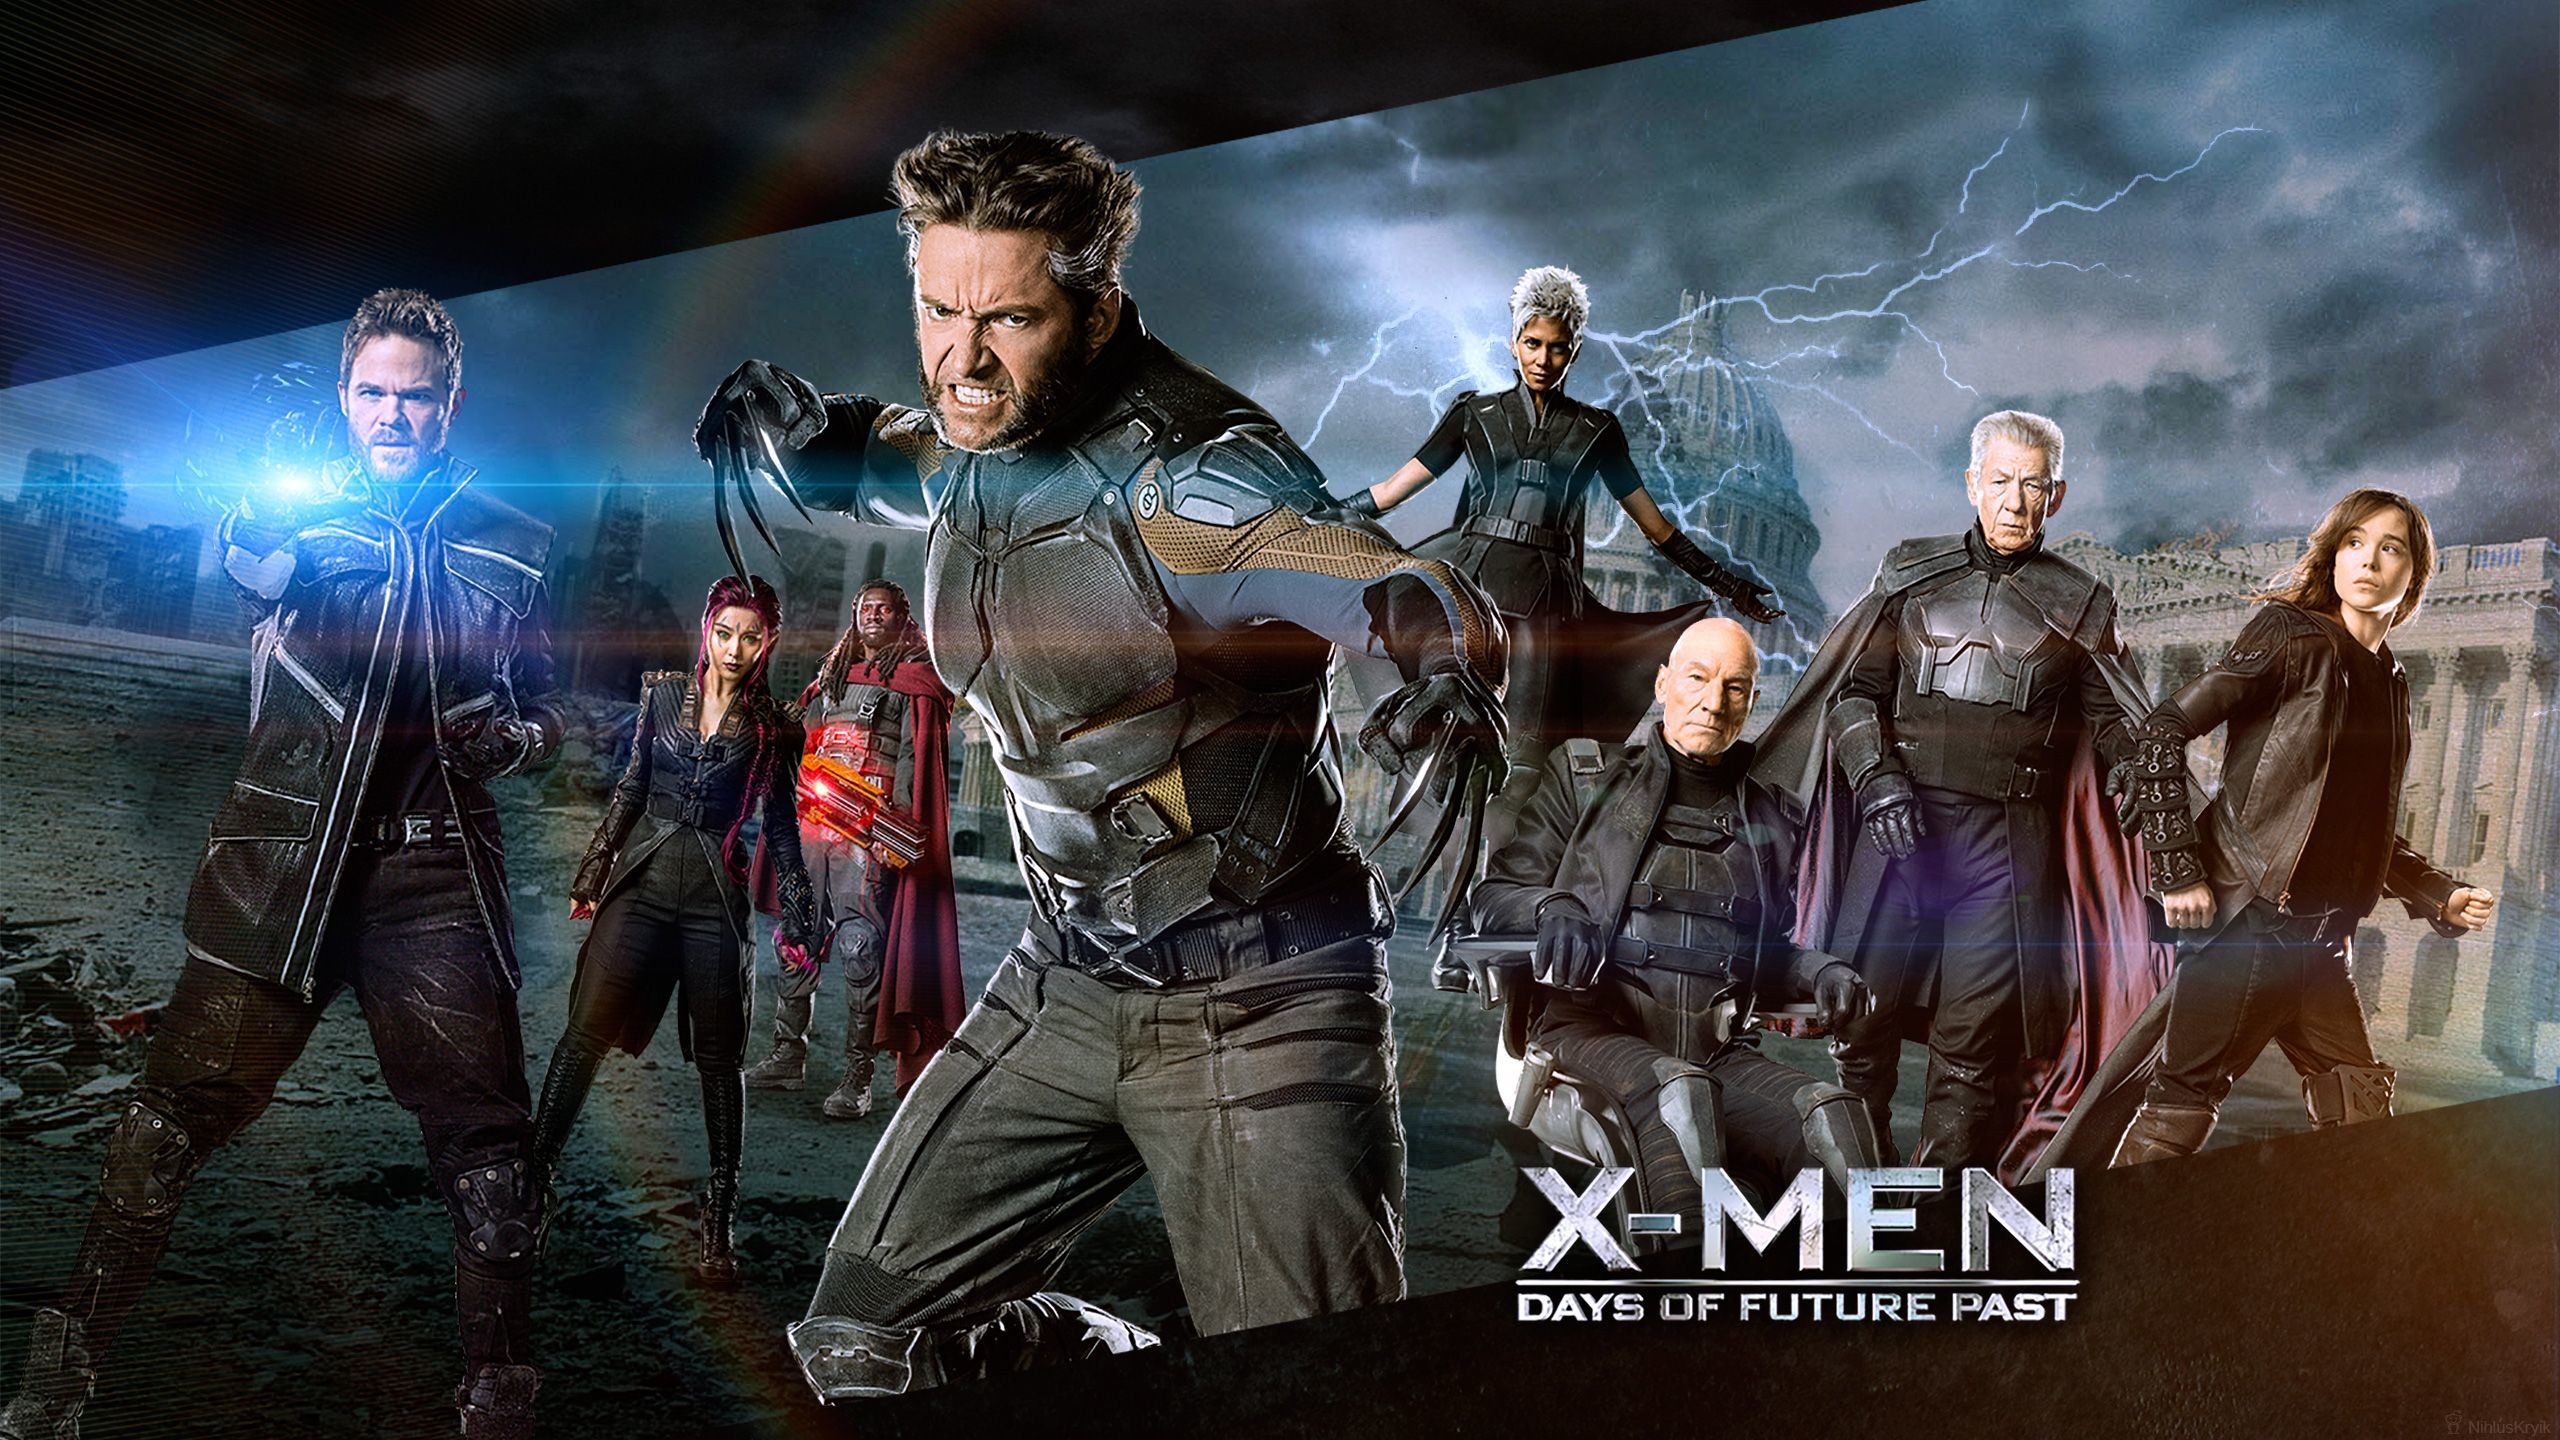 Free Download X Men Movie Wallpaper 2560x1440 Desktop Background [2560x1440] For Your Desktop, Mobile & Tablet. Explore X Men Movie Wallpaper. X Men Movie Wallpaper, X Men Movie Wallpaper, X Men